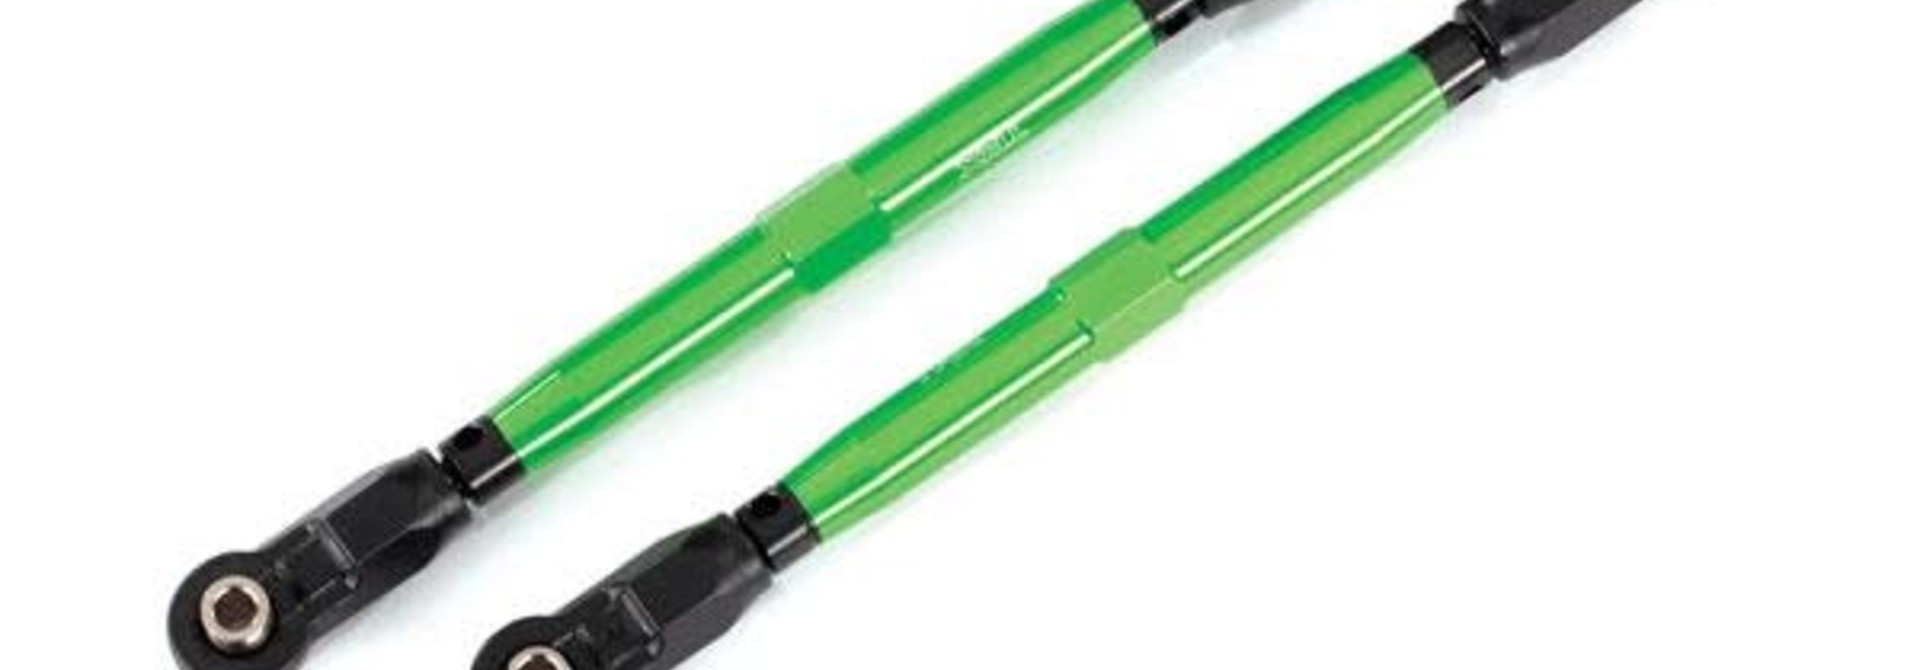 Toe links, Wide Maxx (TUBES 6061-T6 aluminum (green-anodized))